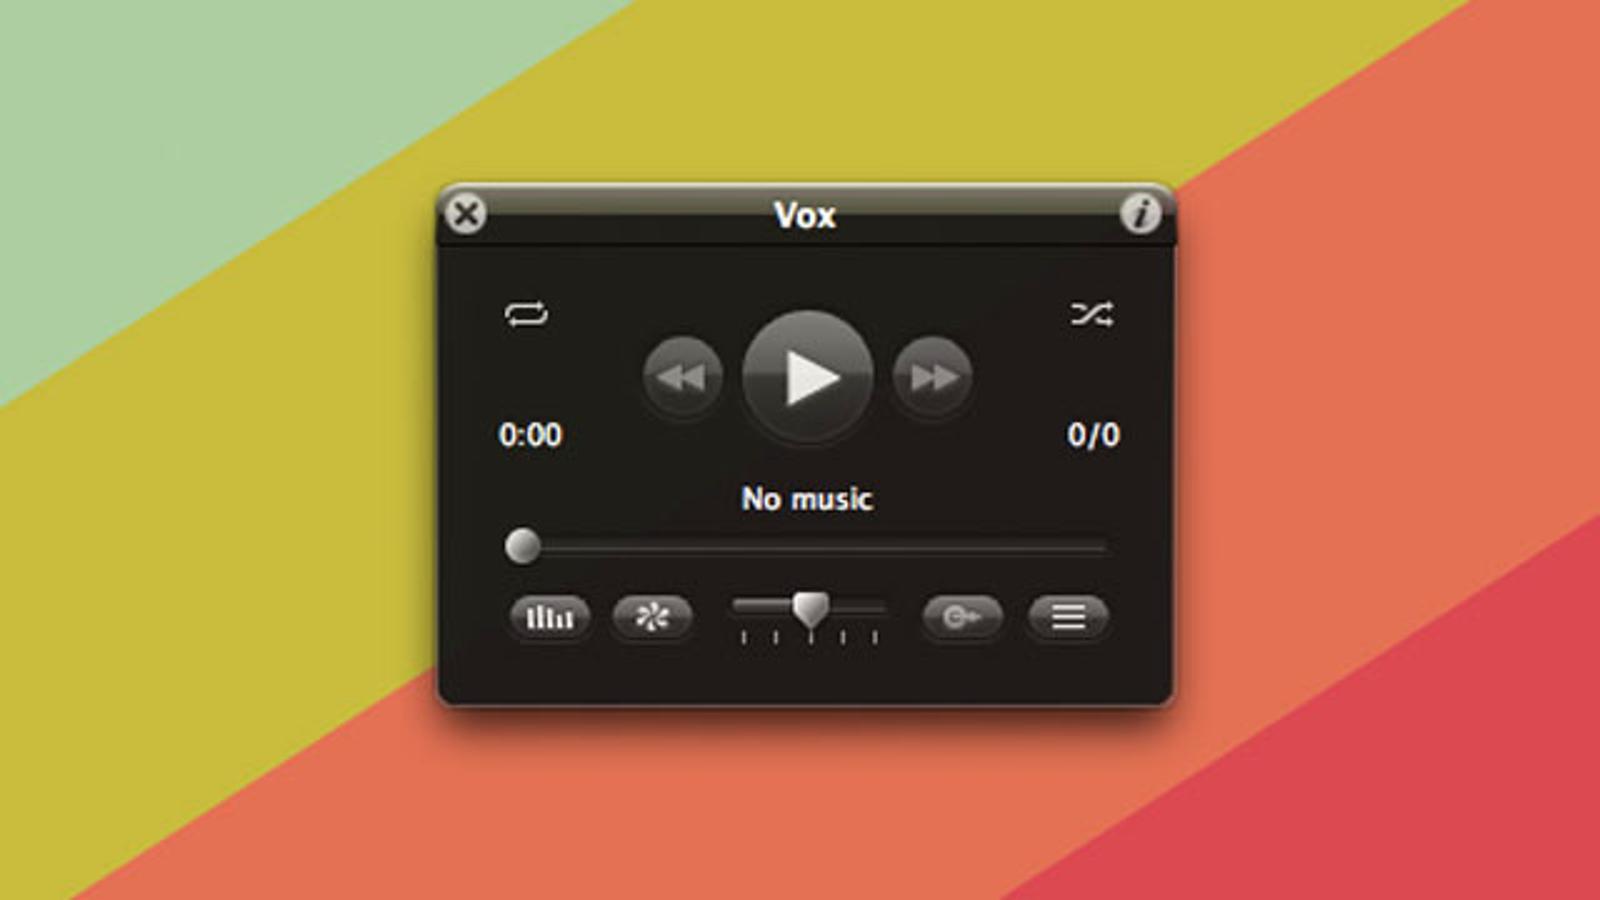 vox player album view